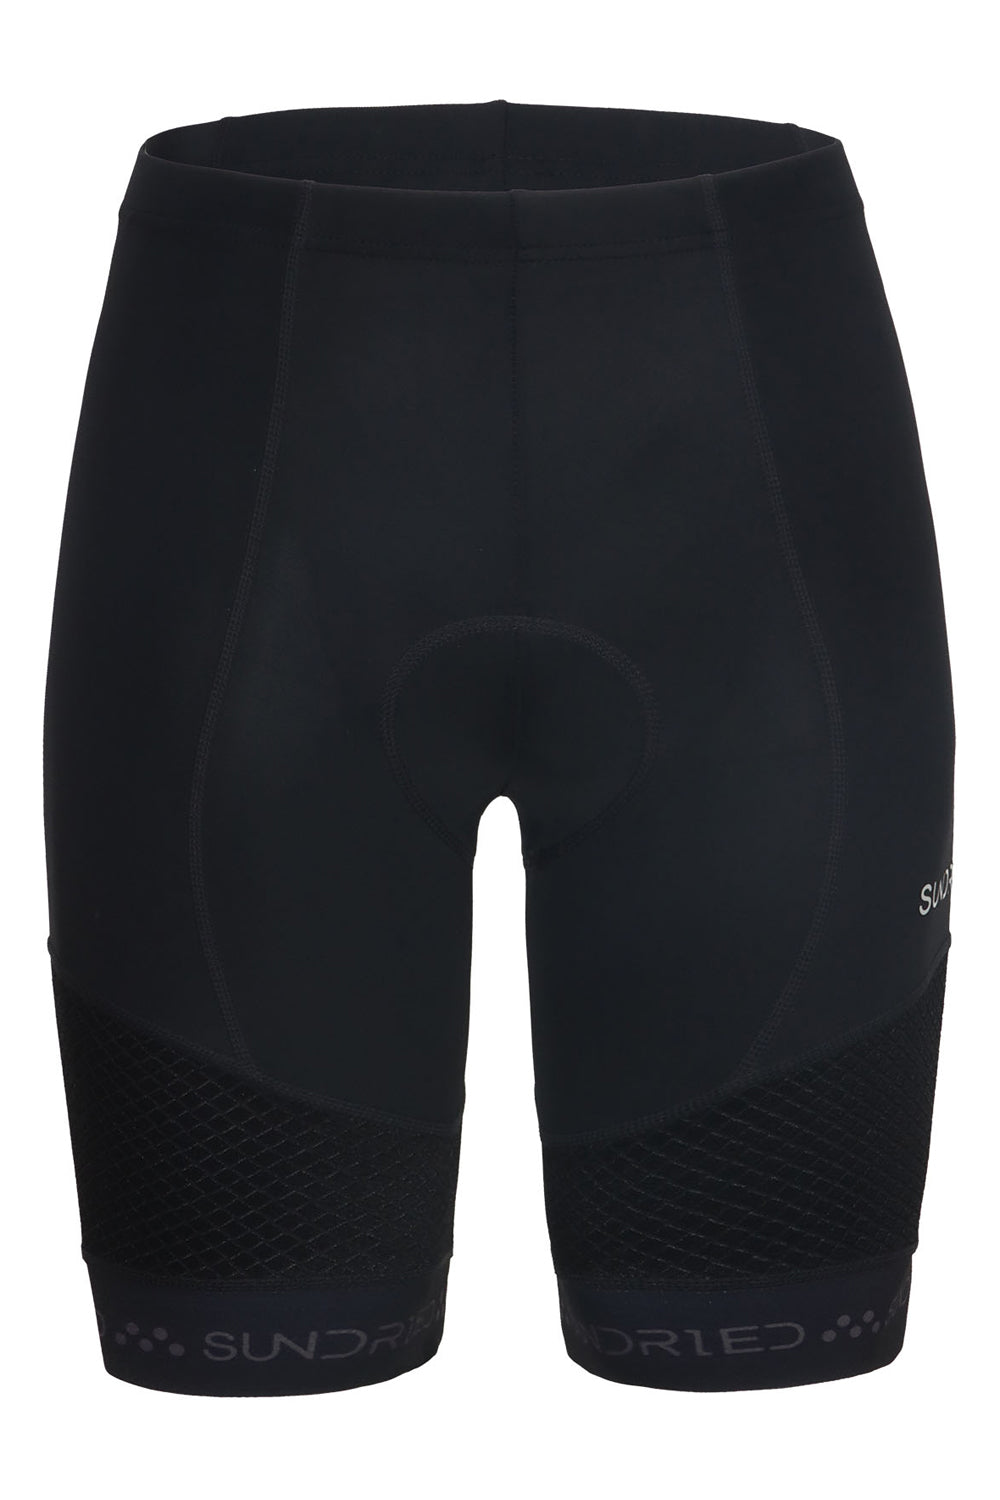 Sundried Women's Padded Training Shorts Bib Shorts XL Black SD0462 XL Black Activewear